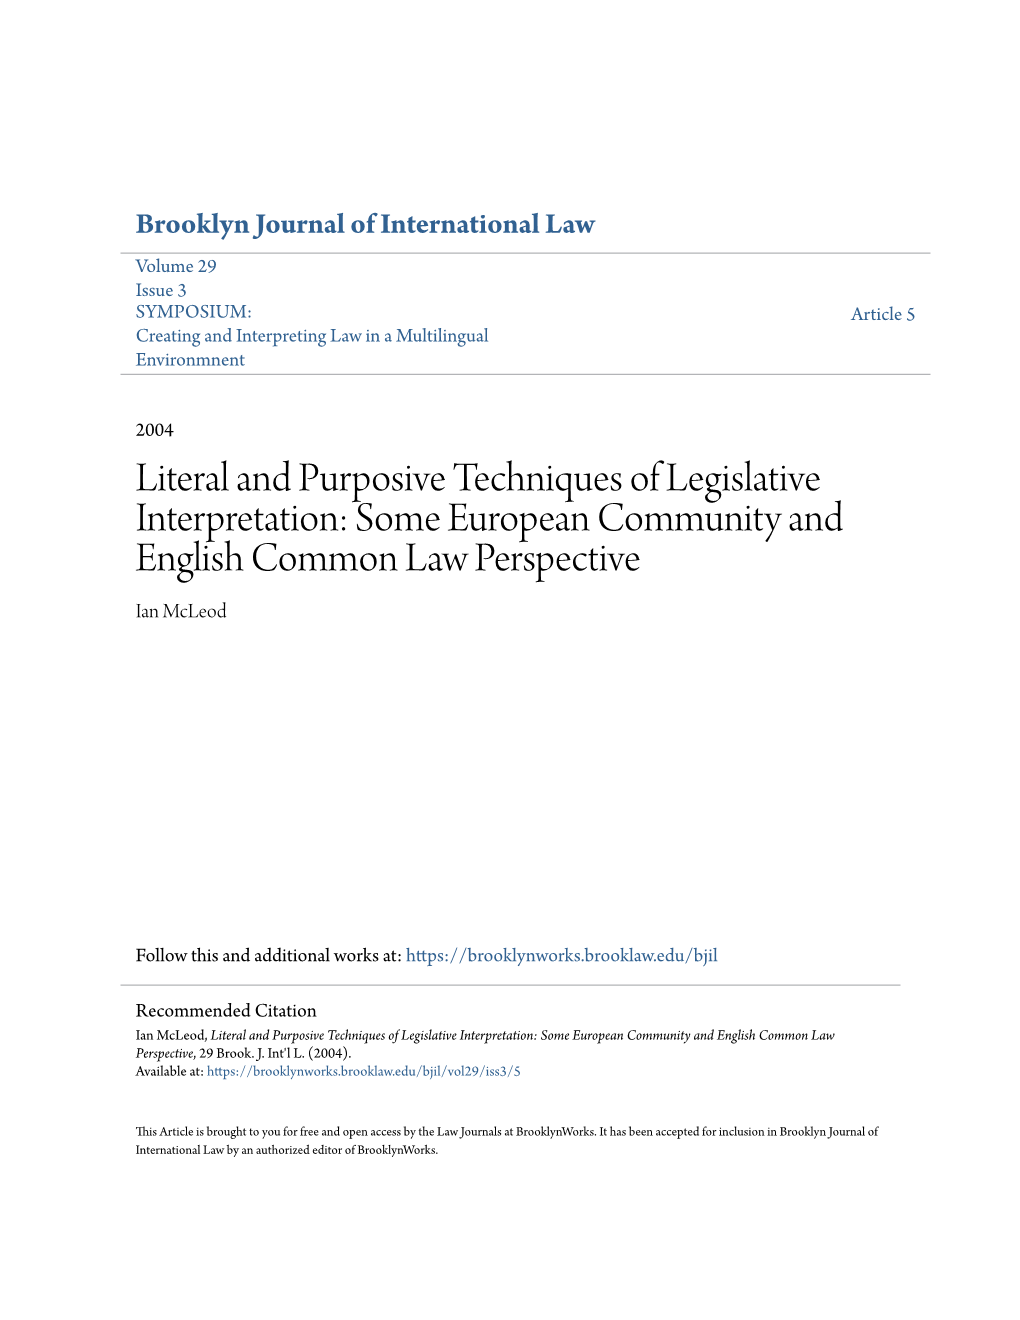 Literal and Purposive Techniques of Legislative Interpretation: Some European Community and English Common Law Perspective Ian Mcleod